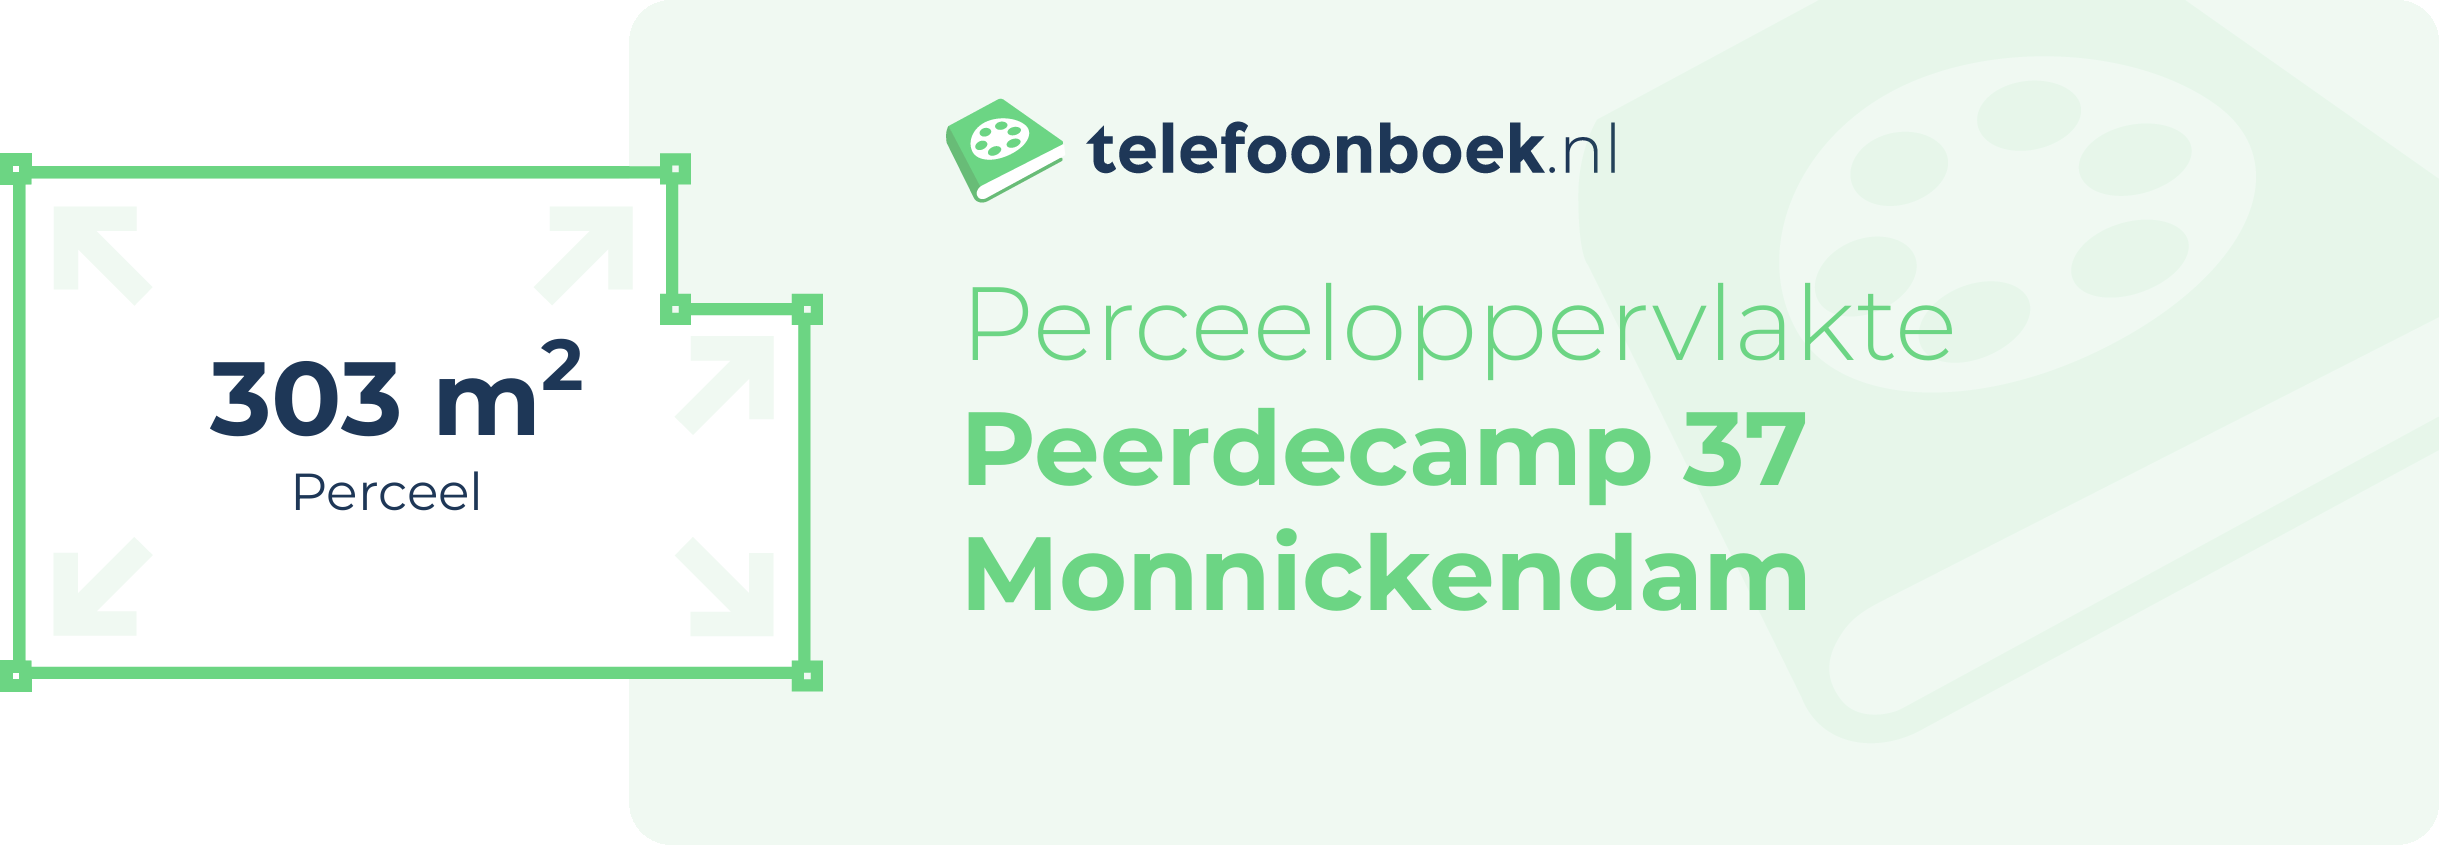 Perceeloppervlakte Peerdecamp 37 Monnickendam